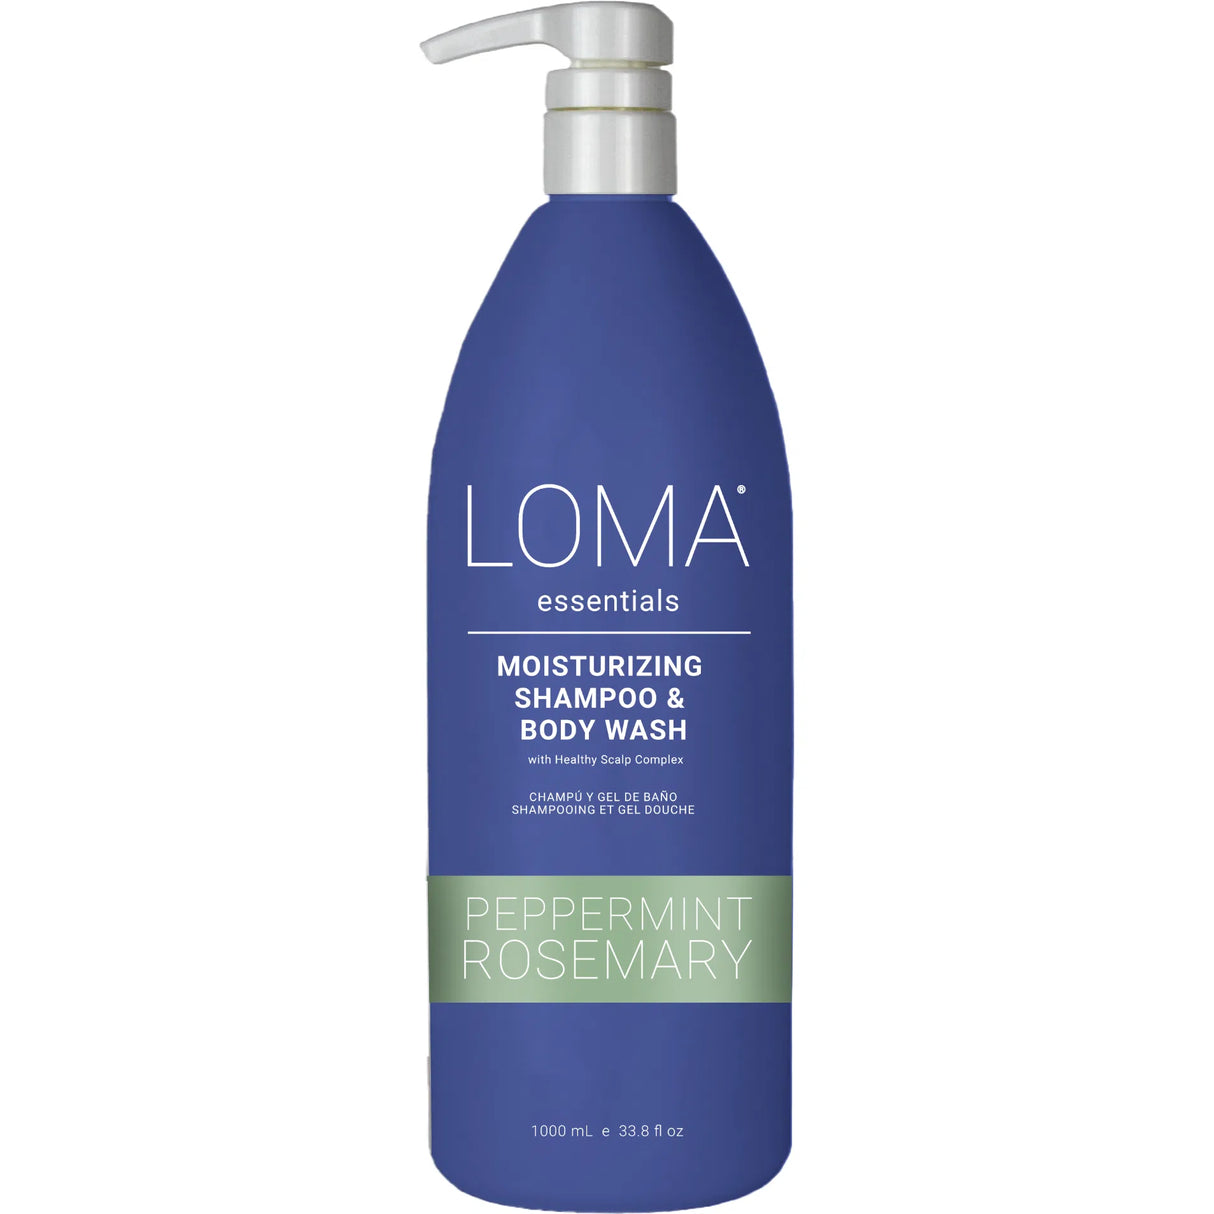 Dry Hair Shampoo And Skin Calming & Healing Lotion Duo, Duos